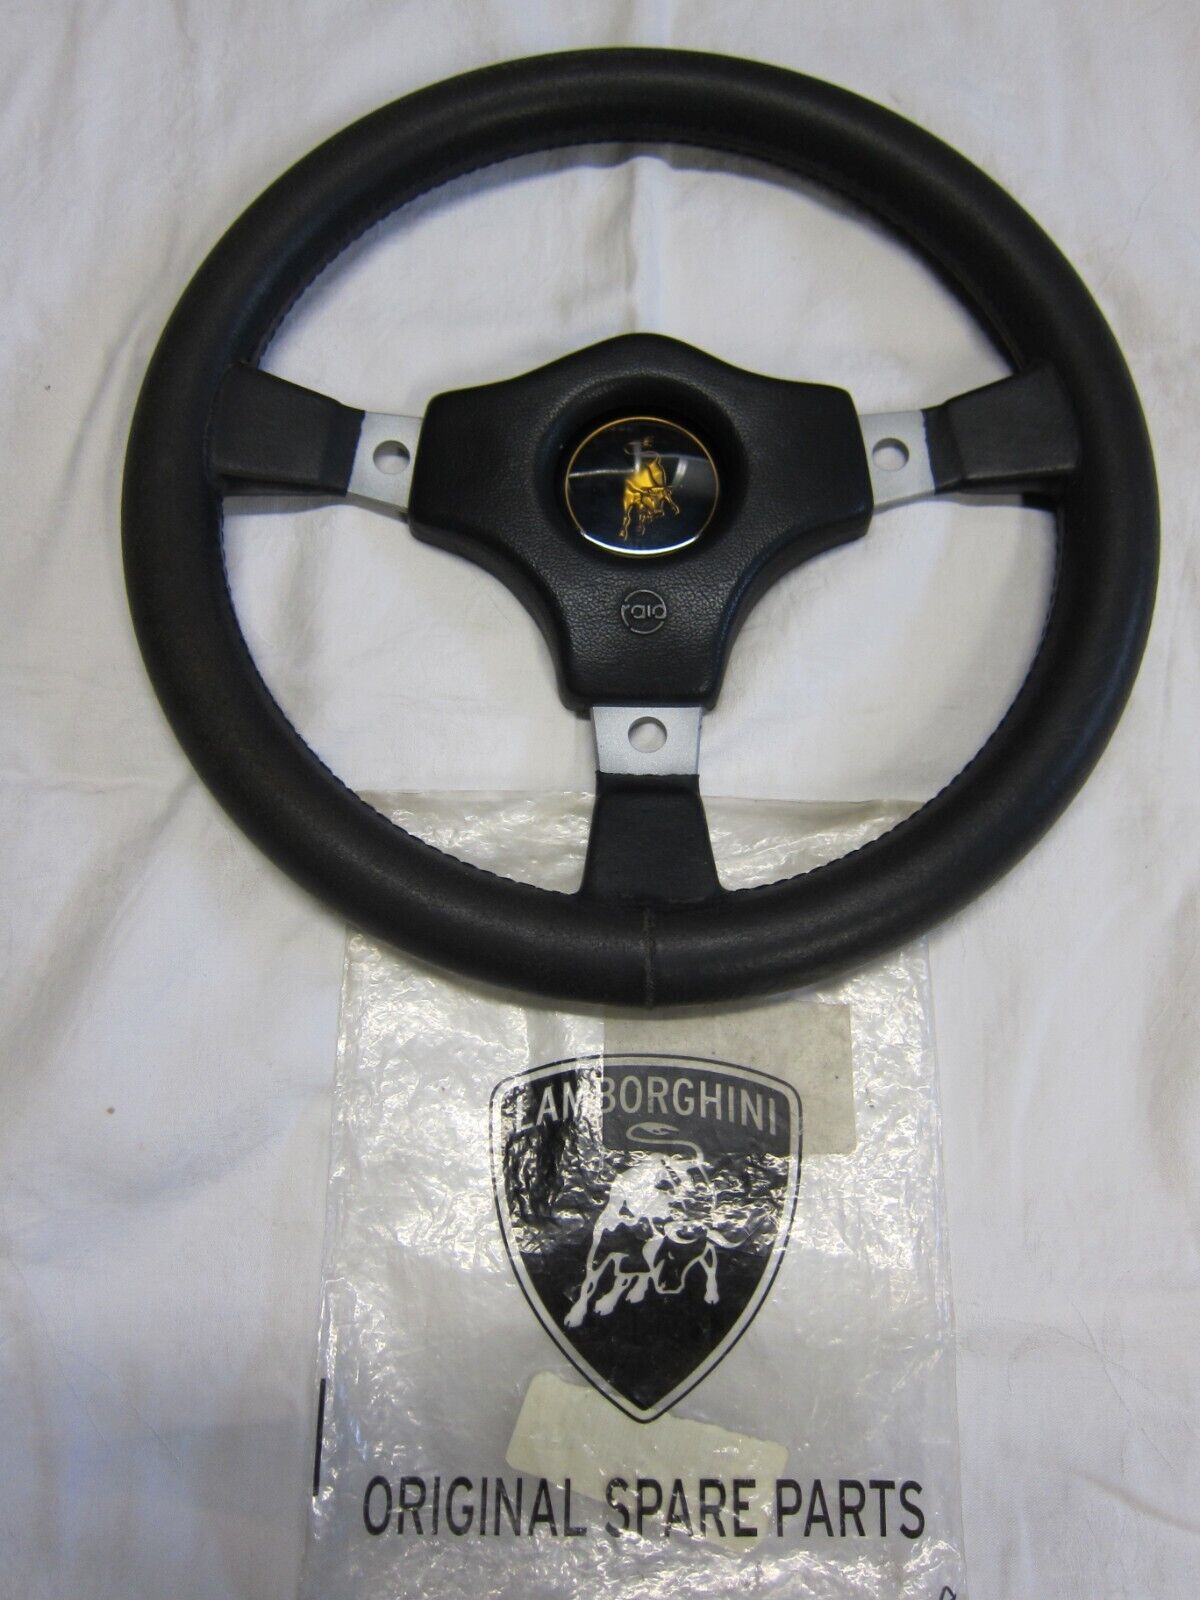 Lamborghini Countach QV, 5000 S Steering wheel with rubber pad